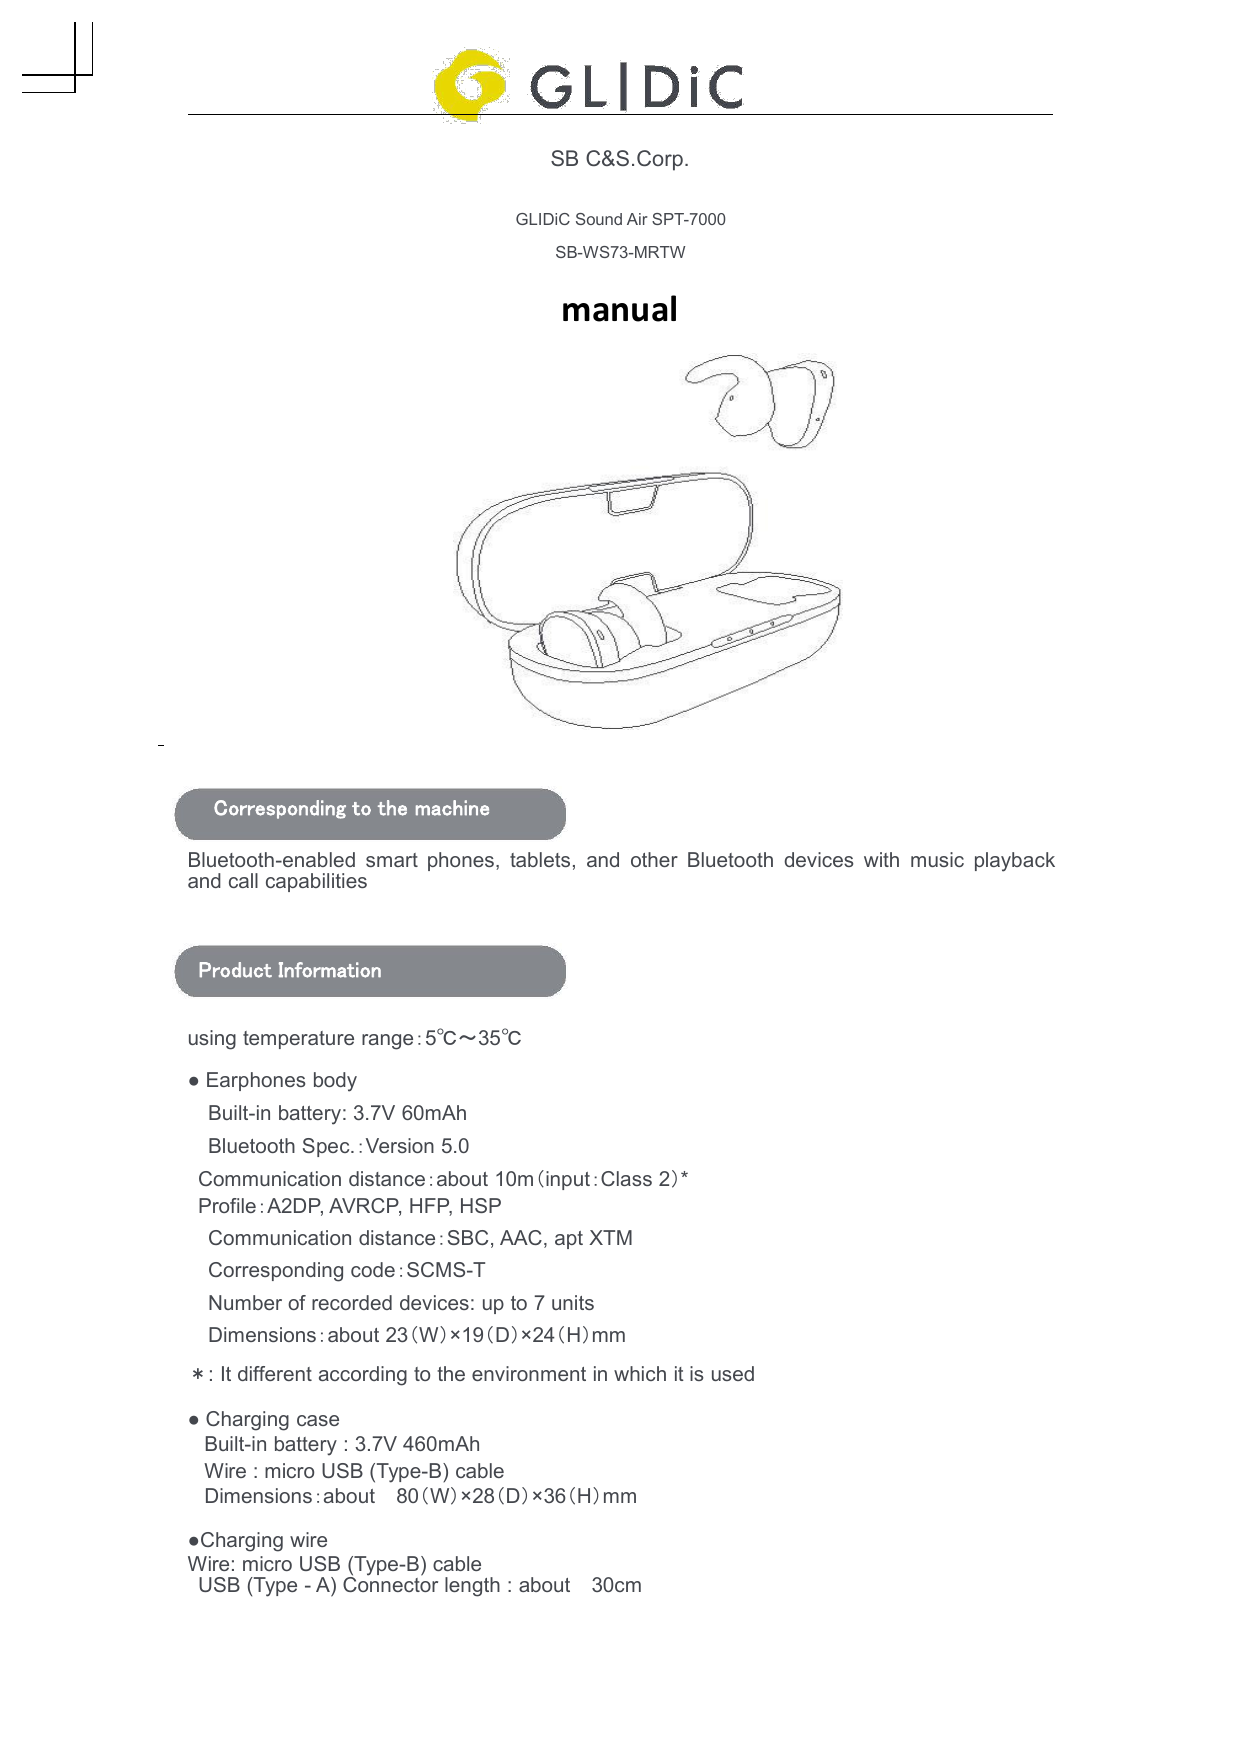 GLIDiC Sound Air SPT-7000 Manual | Manualzz